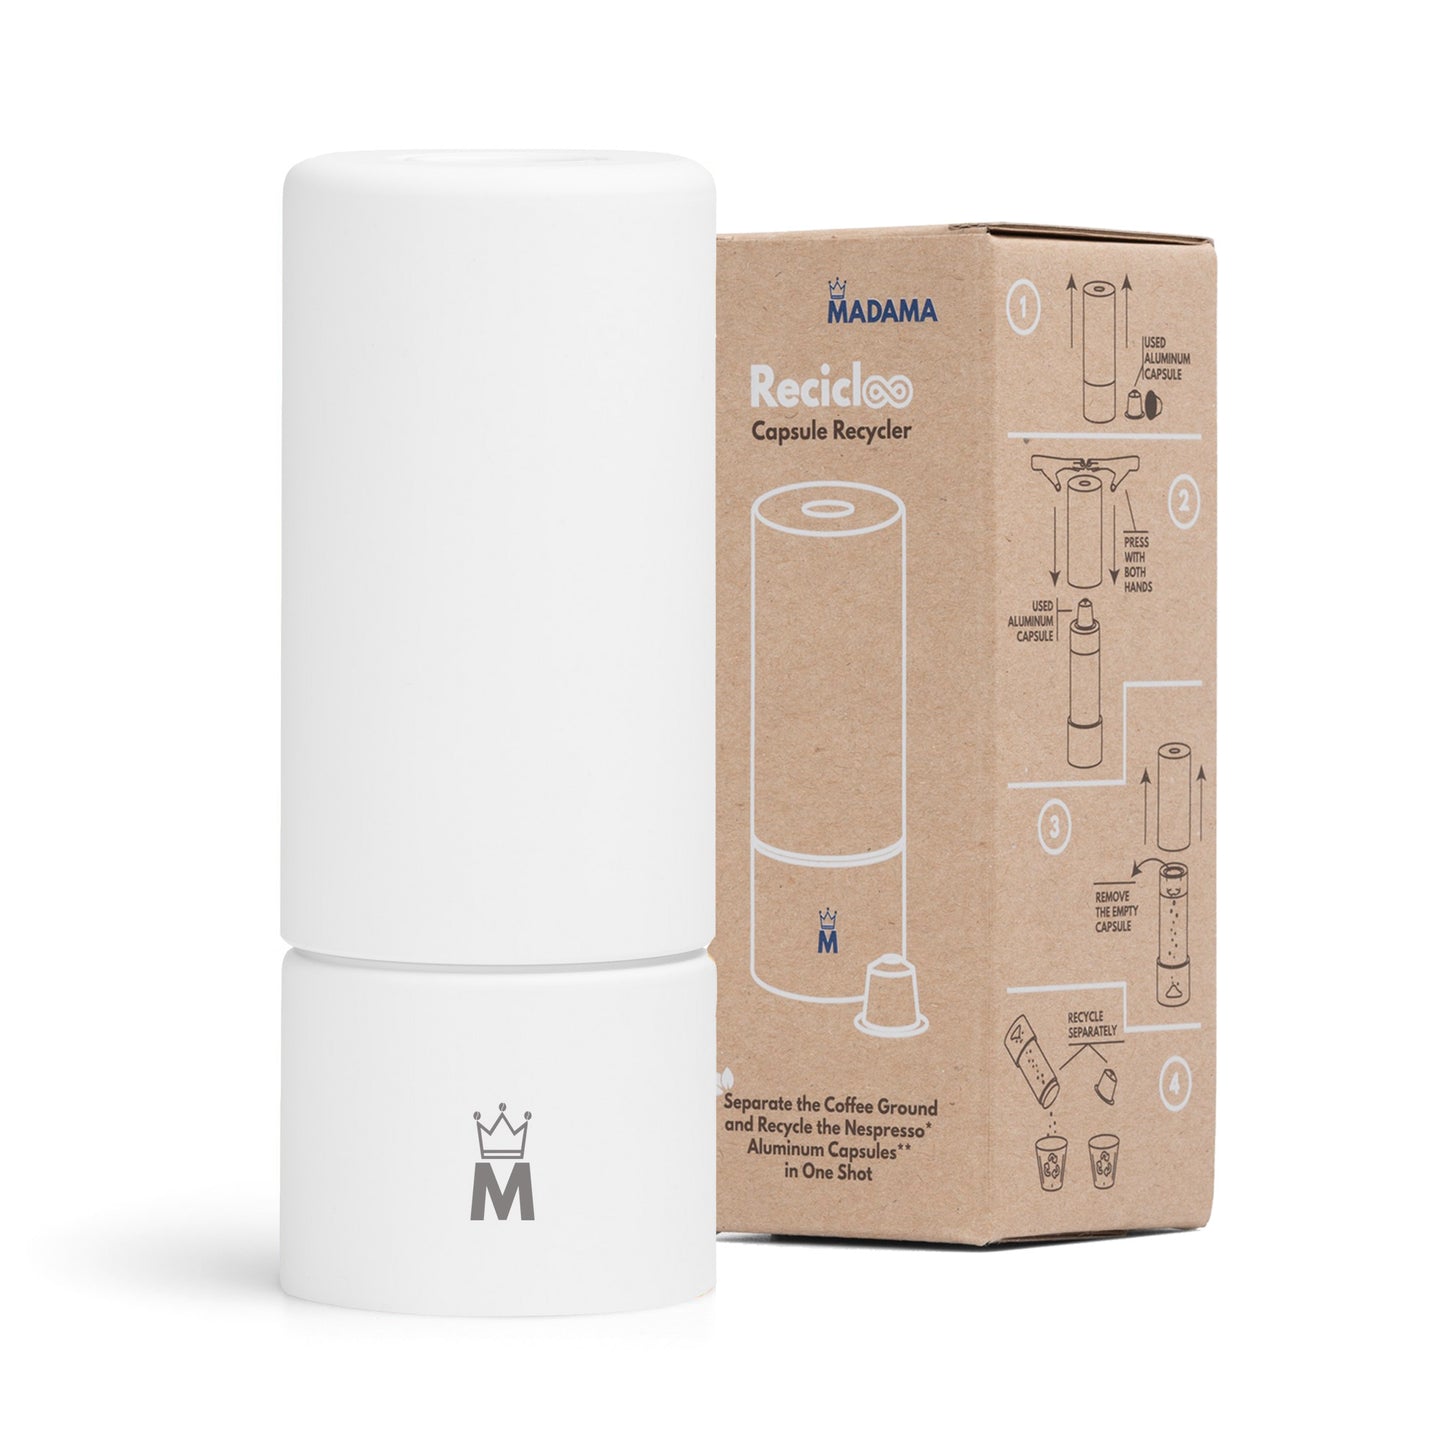 Madama Recicloo - Coffee Capsules Recycling Tool for Aluminum Nespresso Pods. Aluminum Capsule Recycler. White